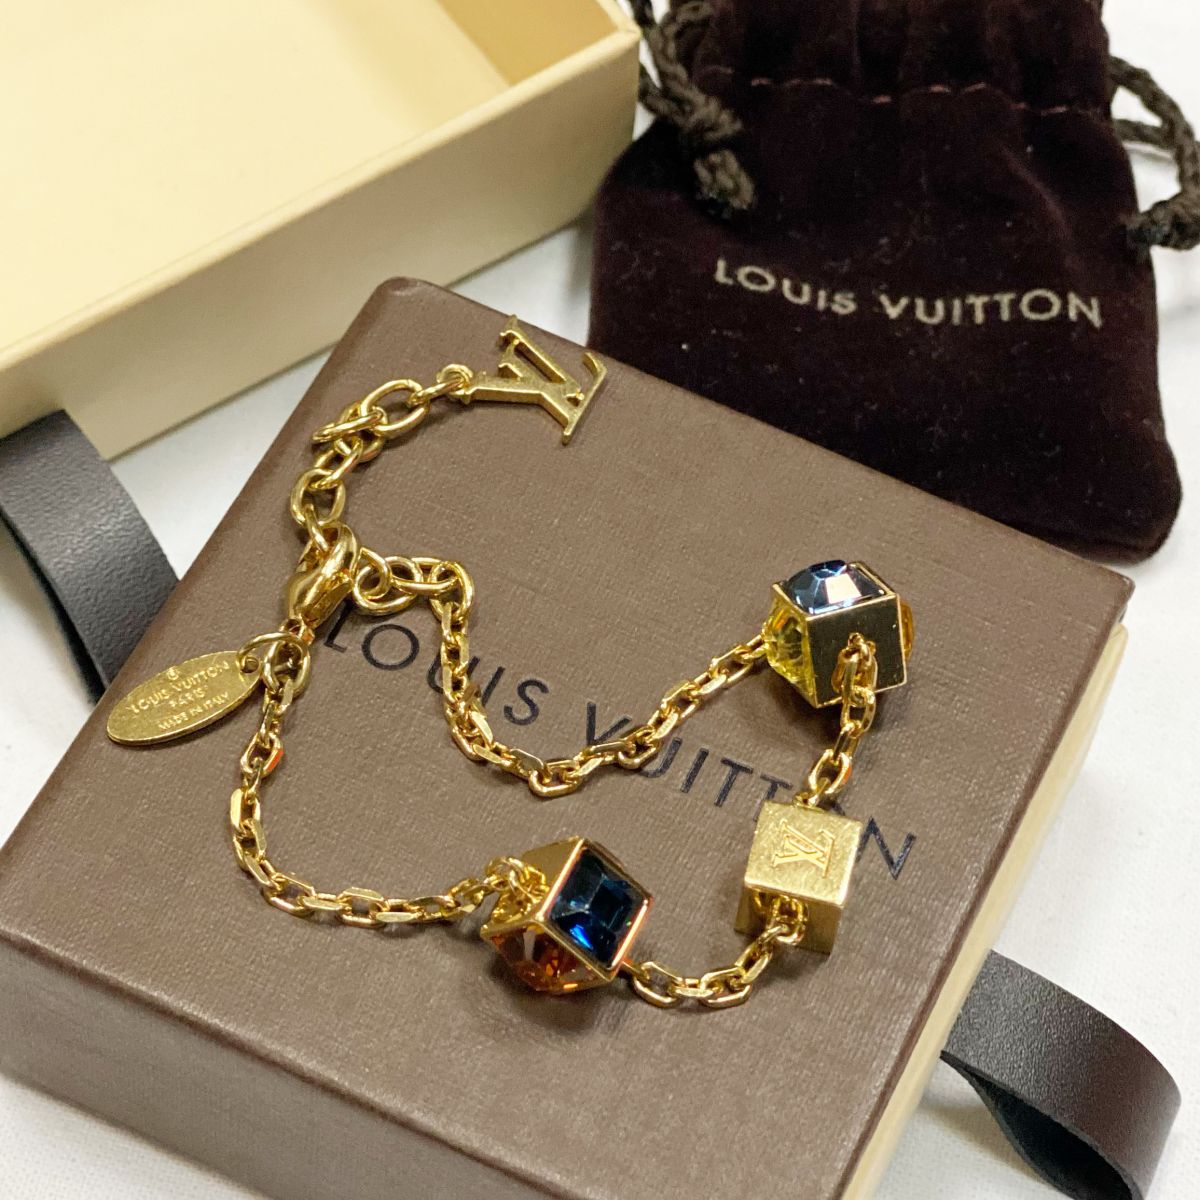 Браслет / камни / Louis Vuitton цена 15 385 руб / упаковка / 